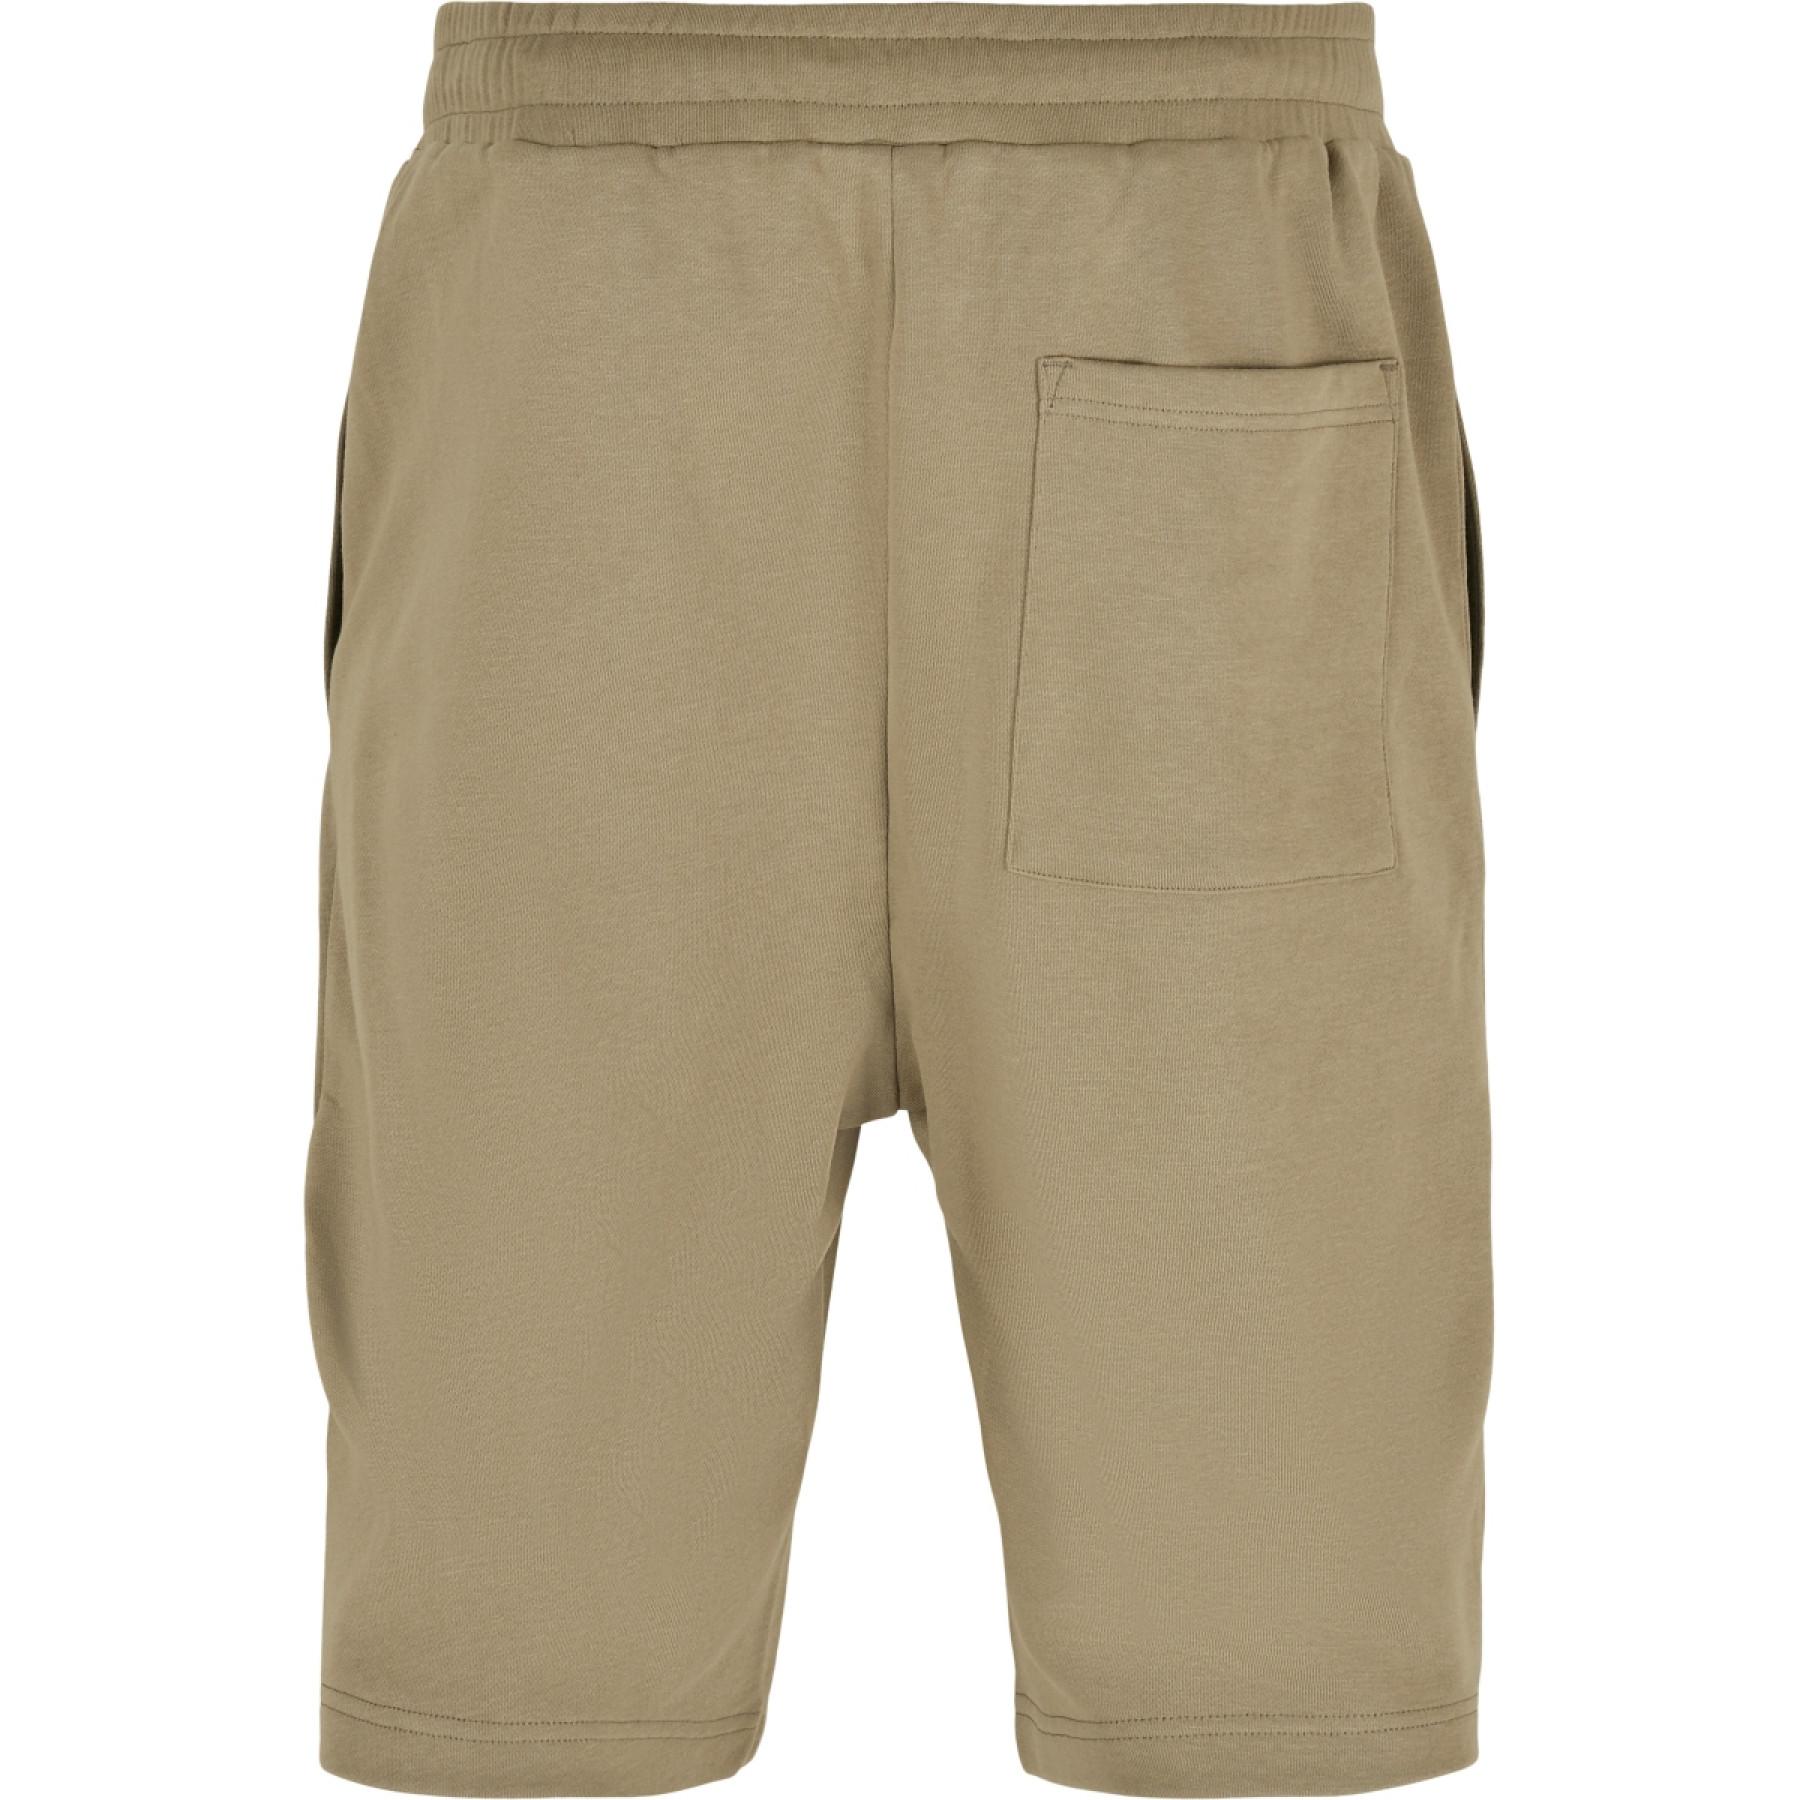 Shorts Urban Classics low crotch-grandes tailles